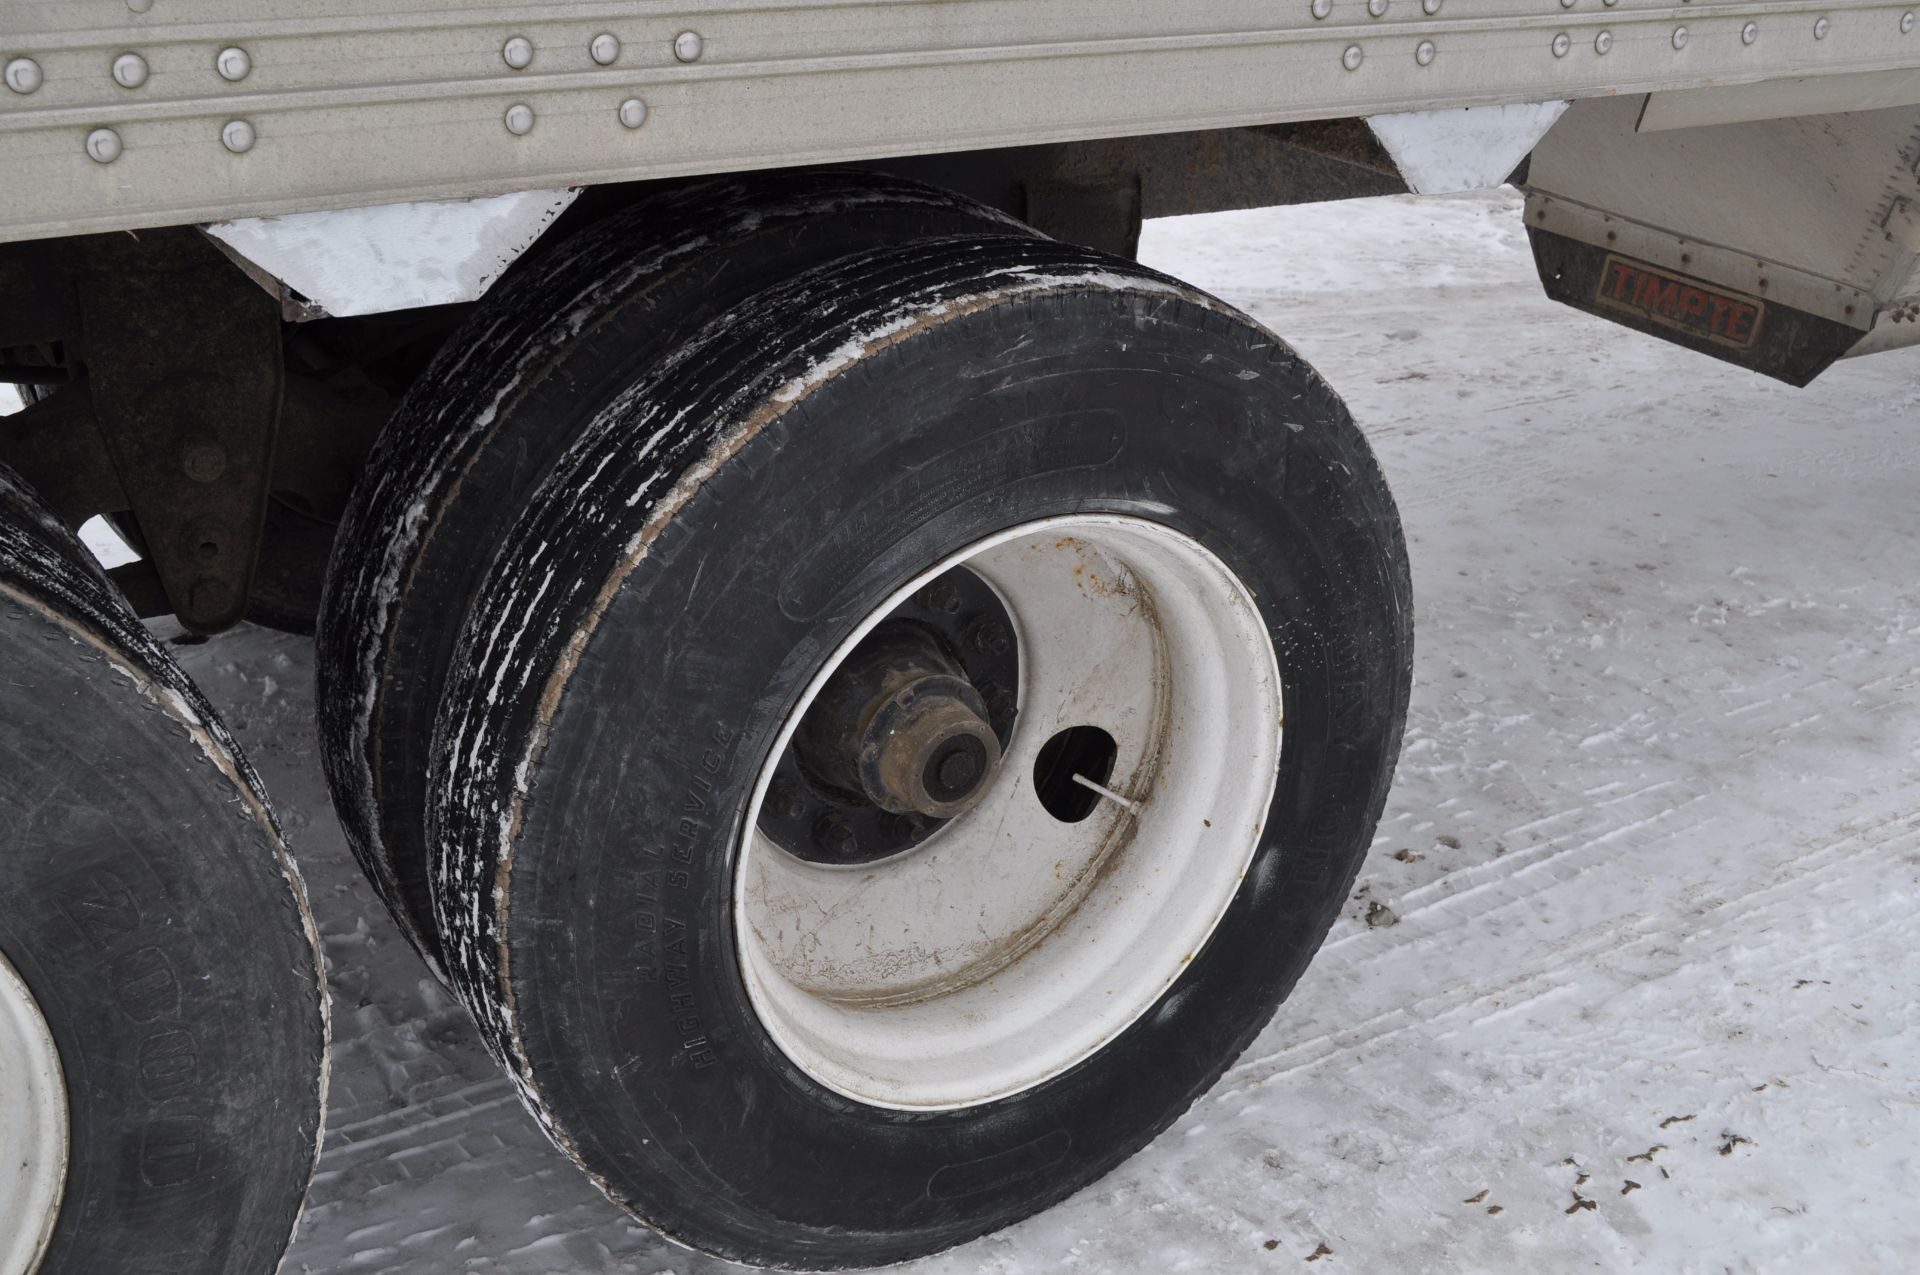 1993 42’ Timpte hopper bottom trailer, spring ride, 11R24.5 tires, roll tarp, VIN H42221PB084815 - Image 16 of 19